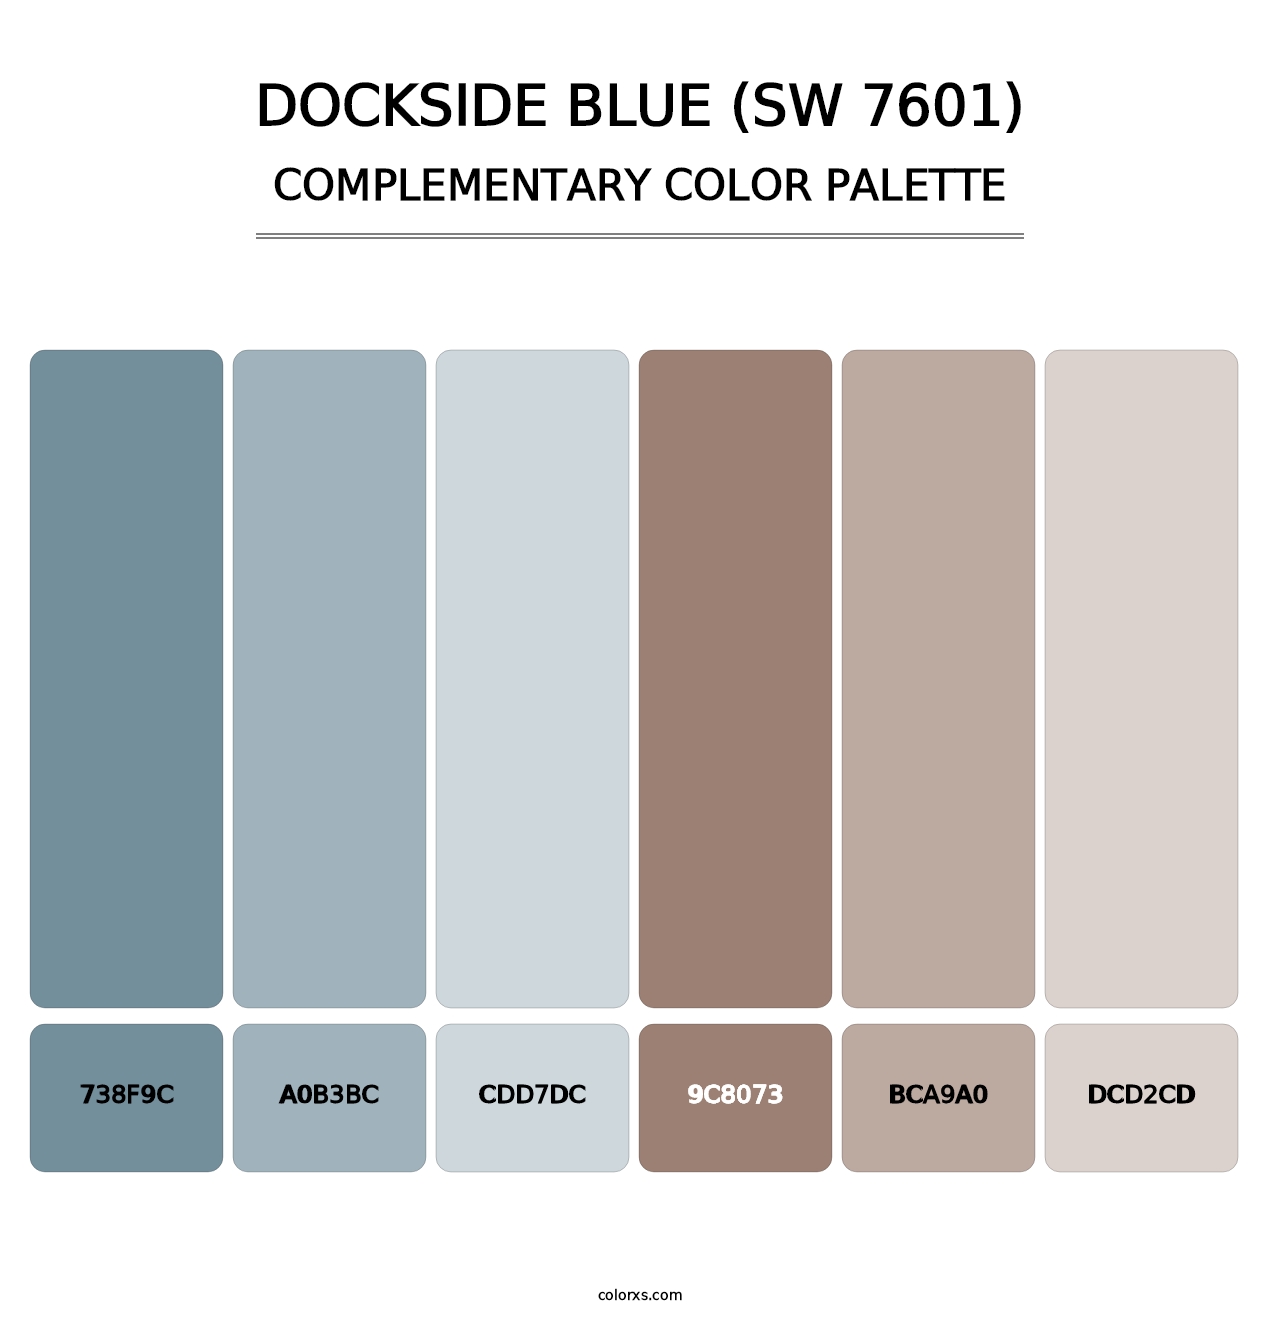 Dockside Blue (SW 7601) - Complementary Color Palette